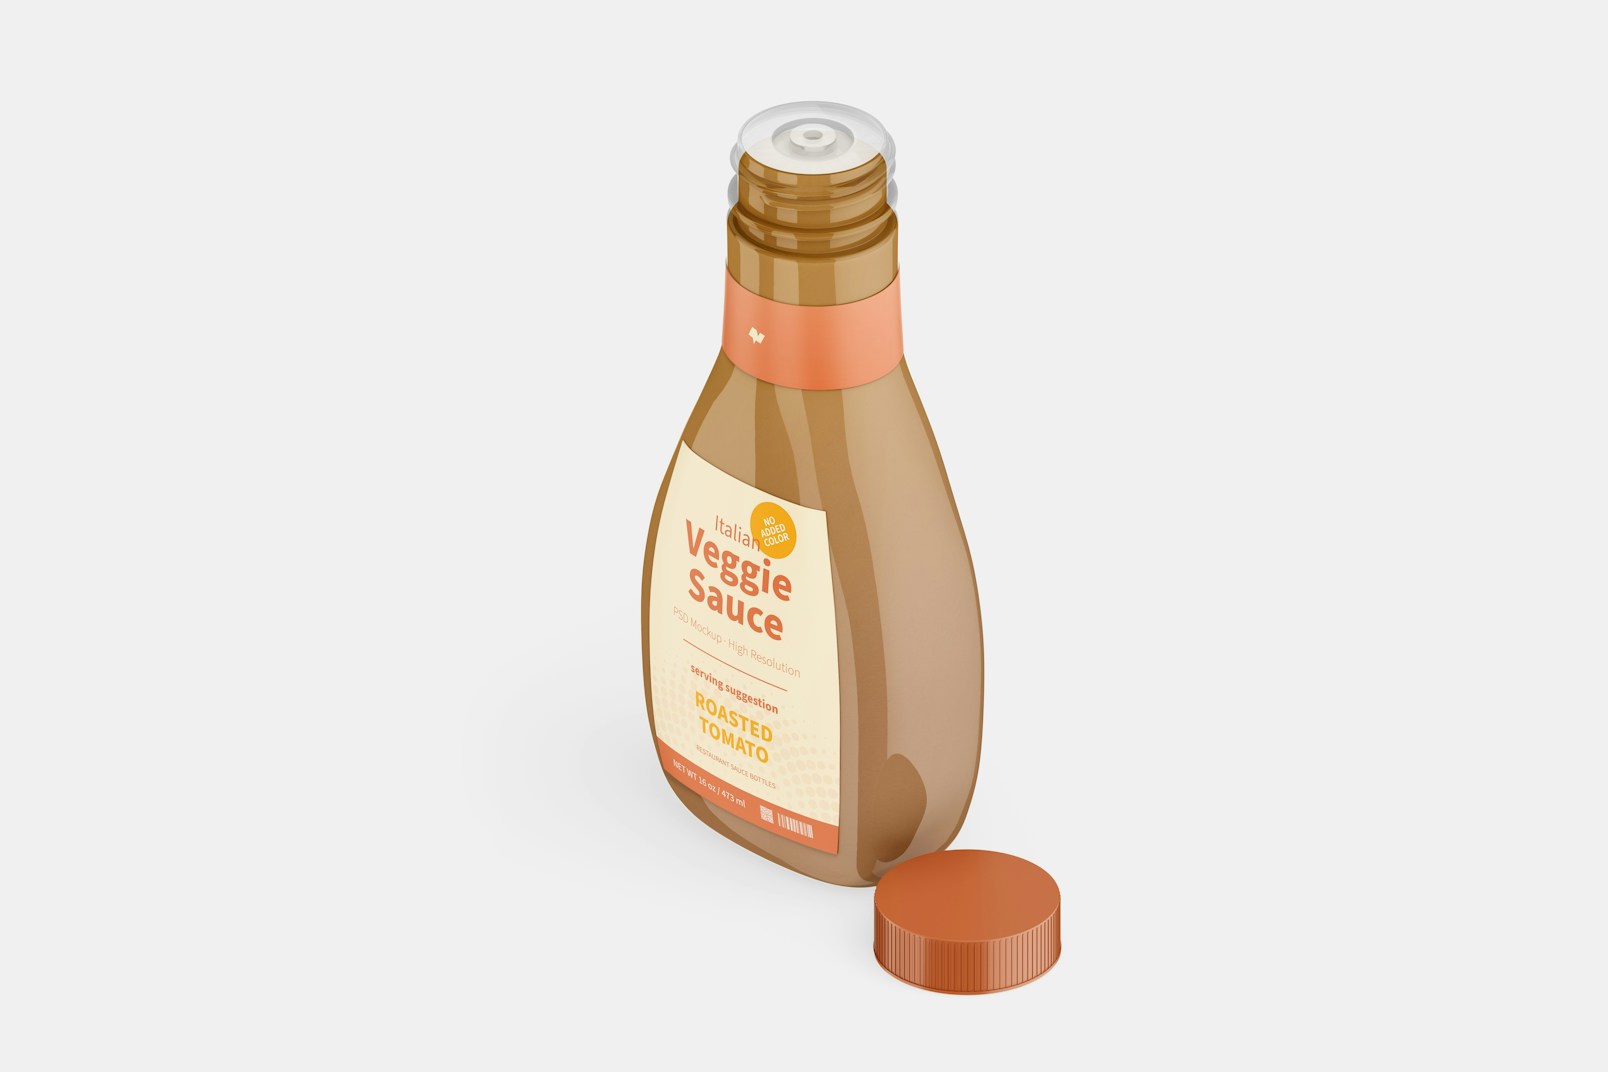 16 oz Italian Veggie Sauce Bottle Mockup, Isometric Left View